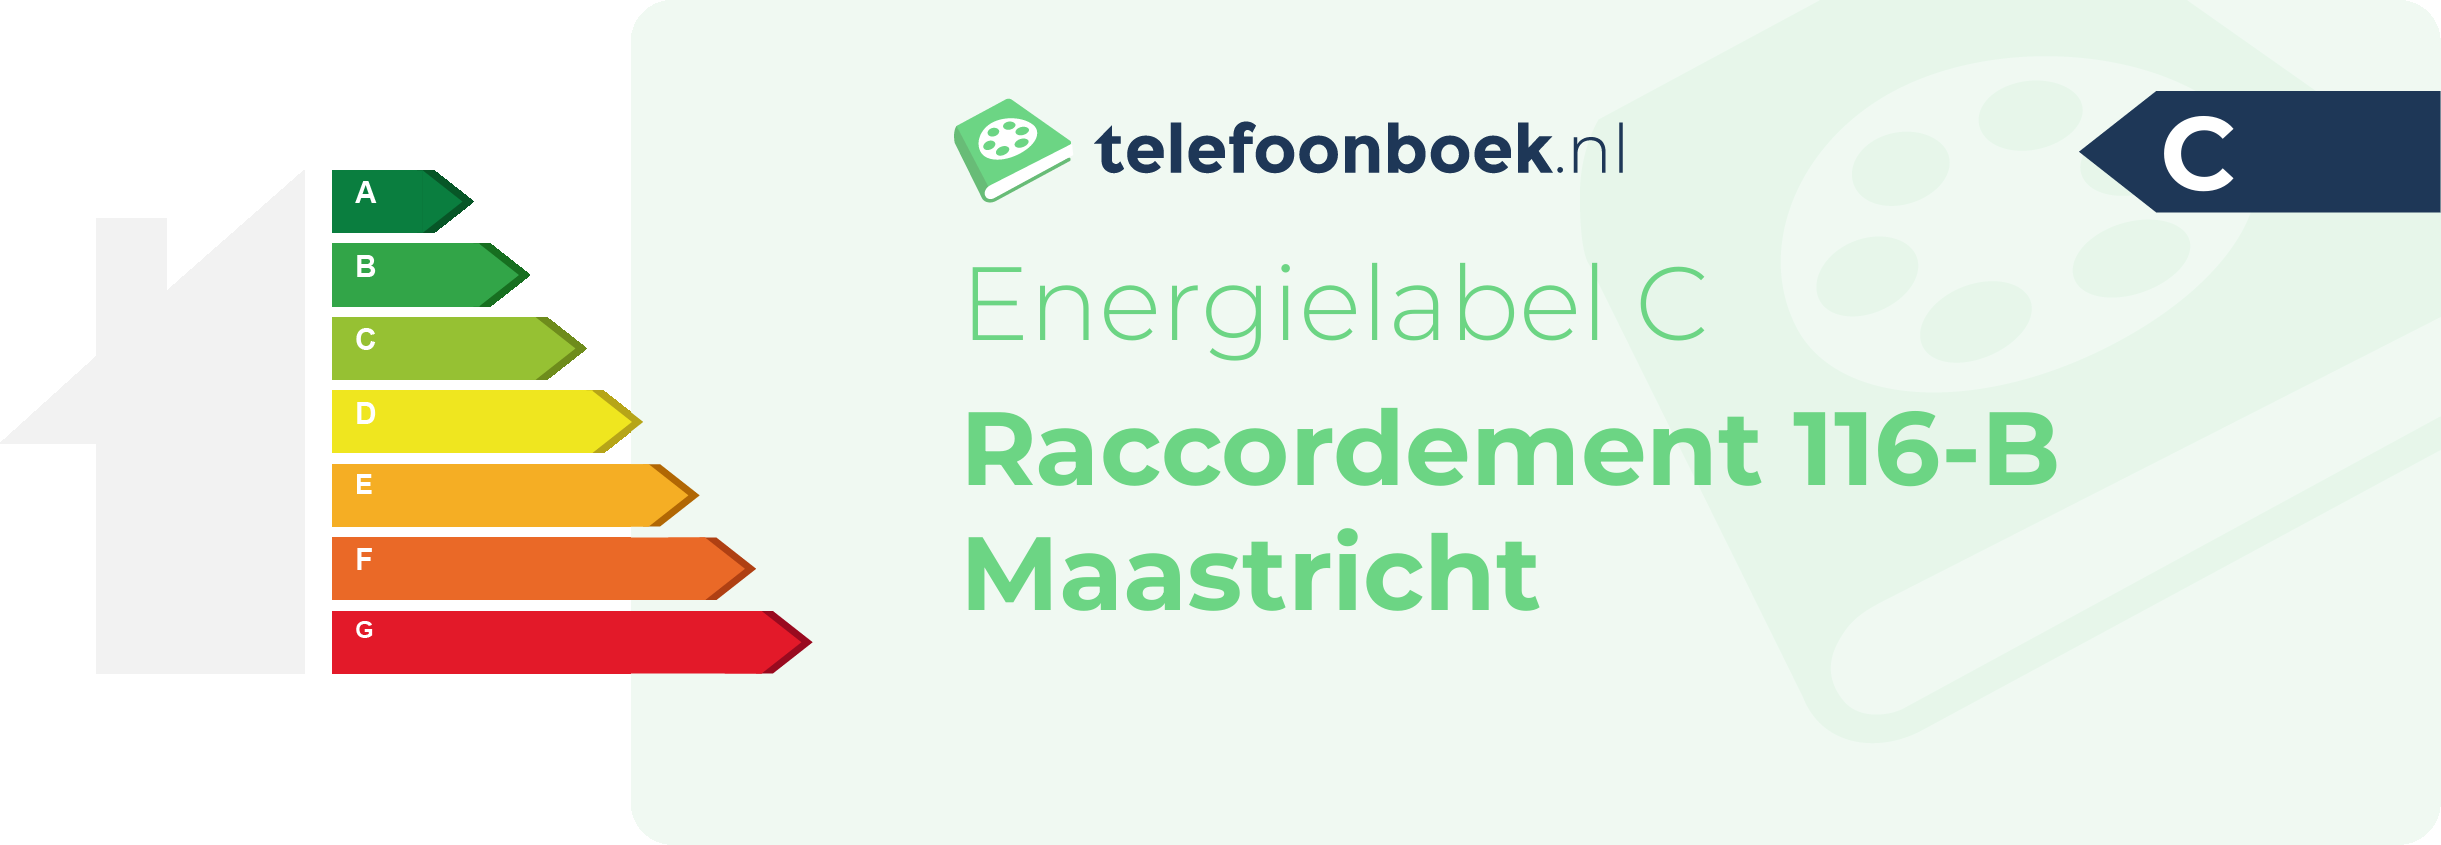 Energielabel Raccordement 116-B Maastricht